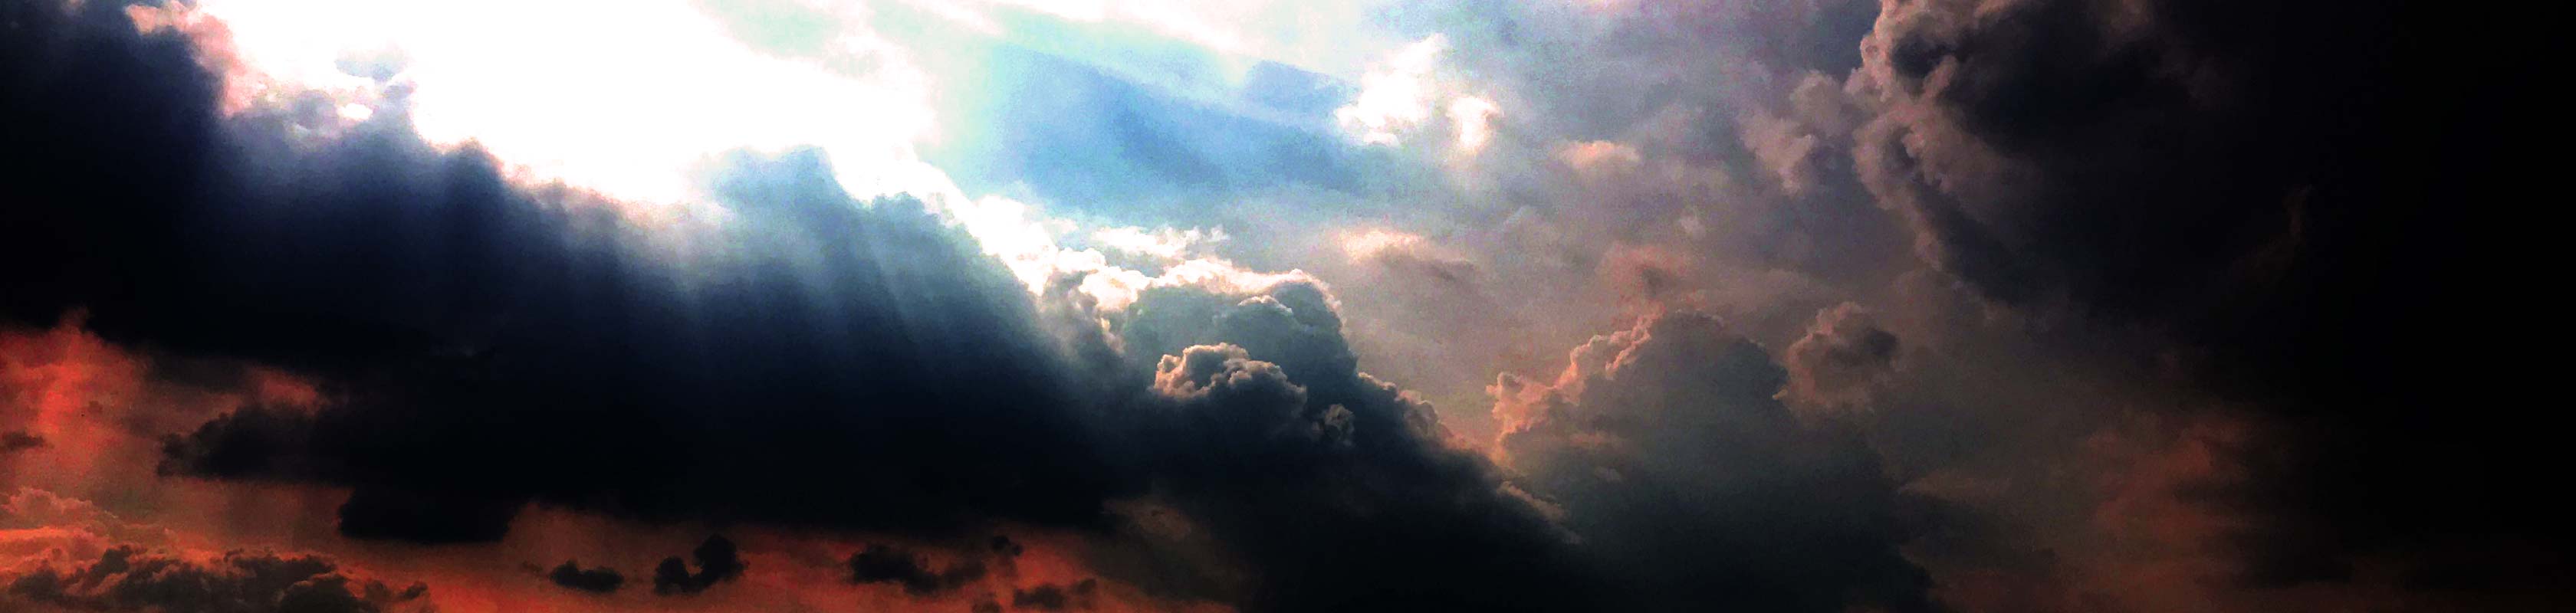 Gospel Clouds - Night